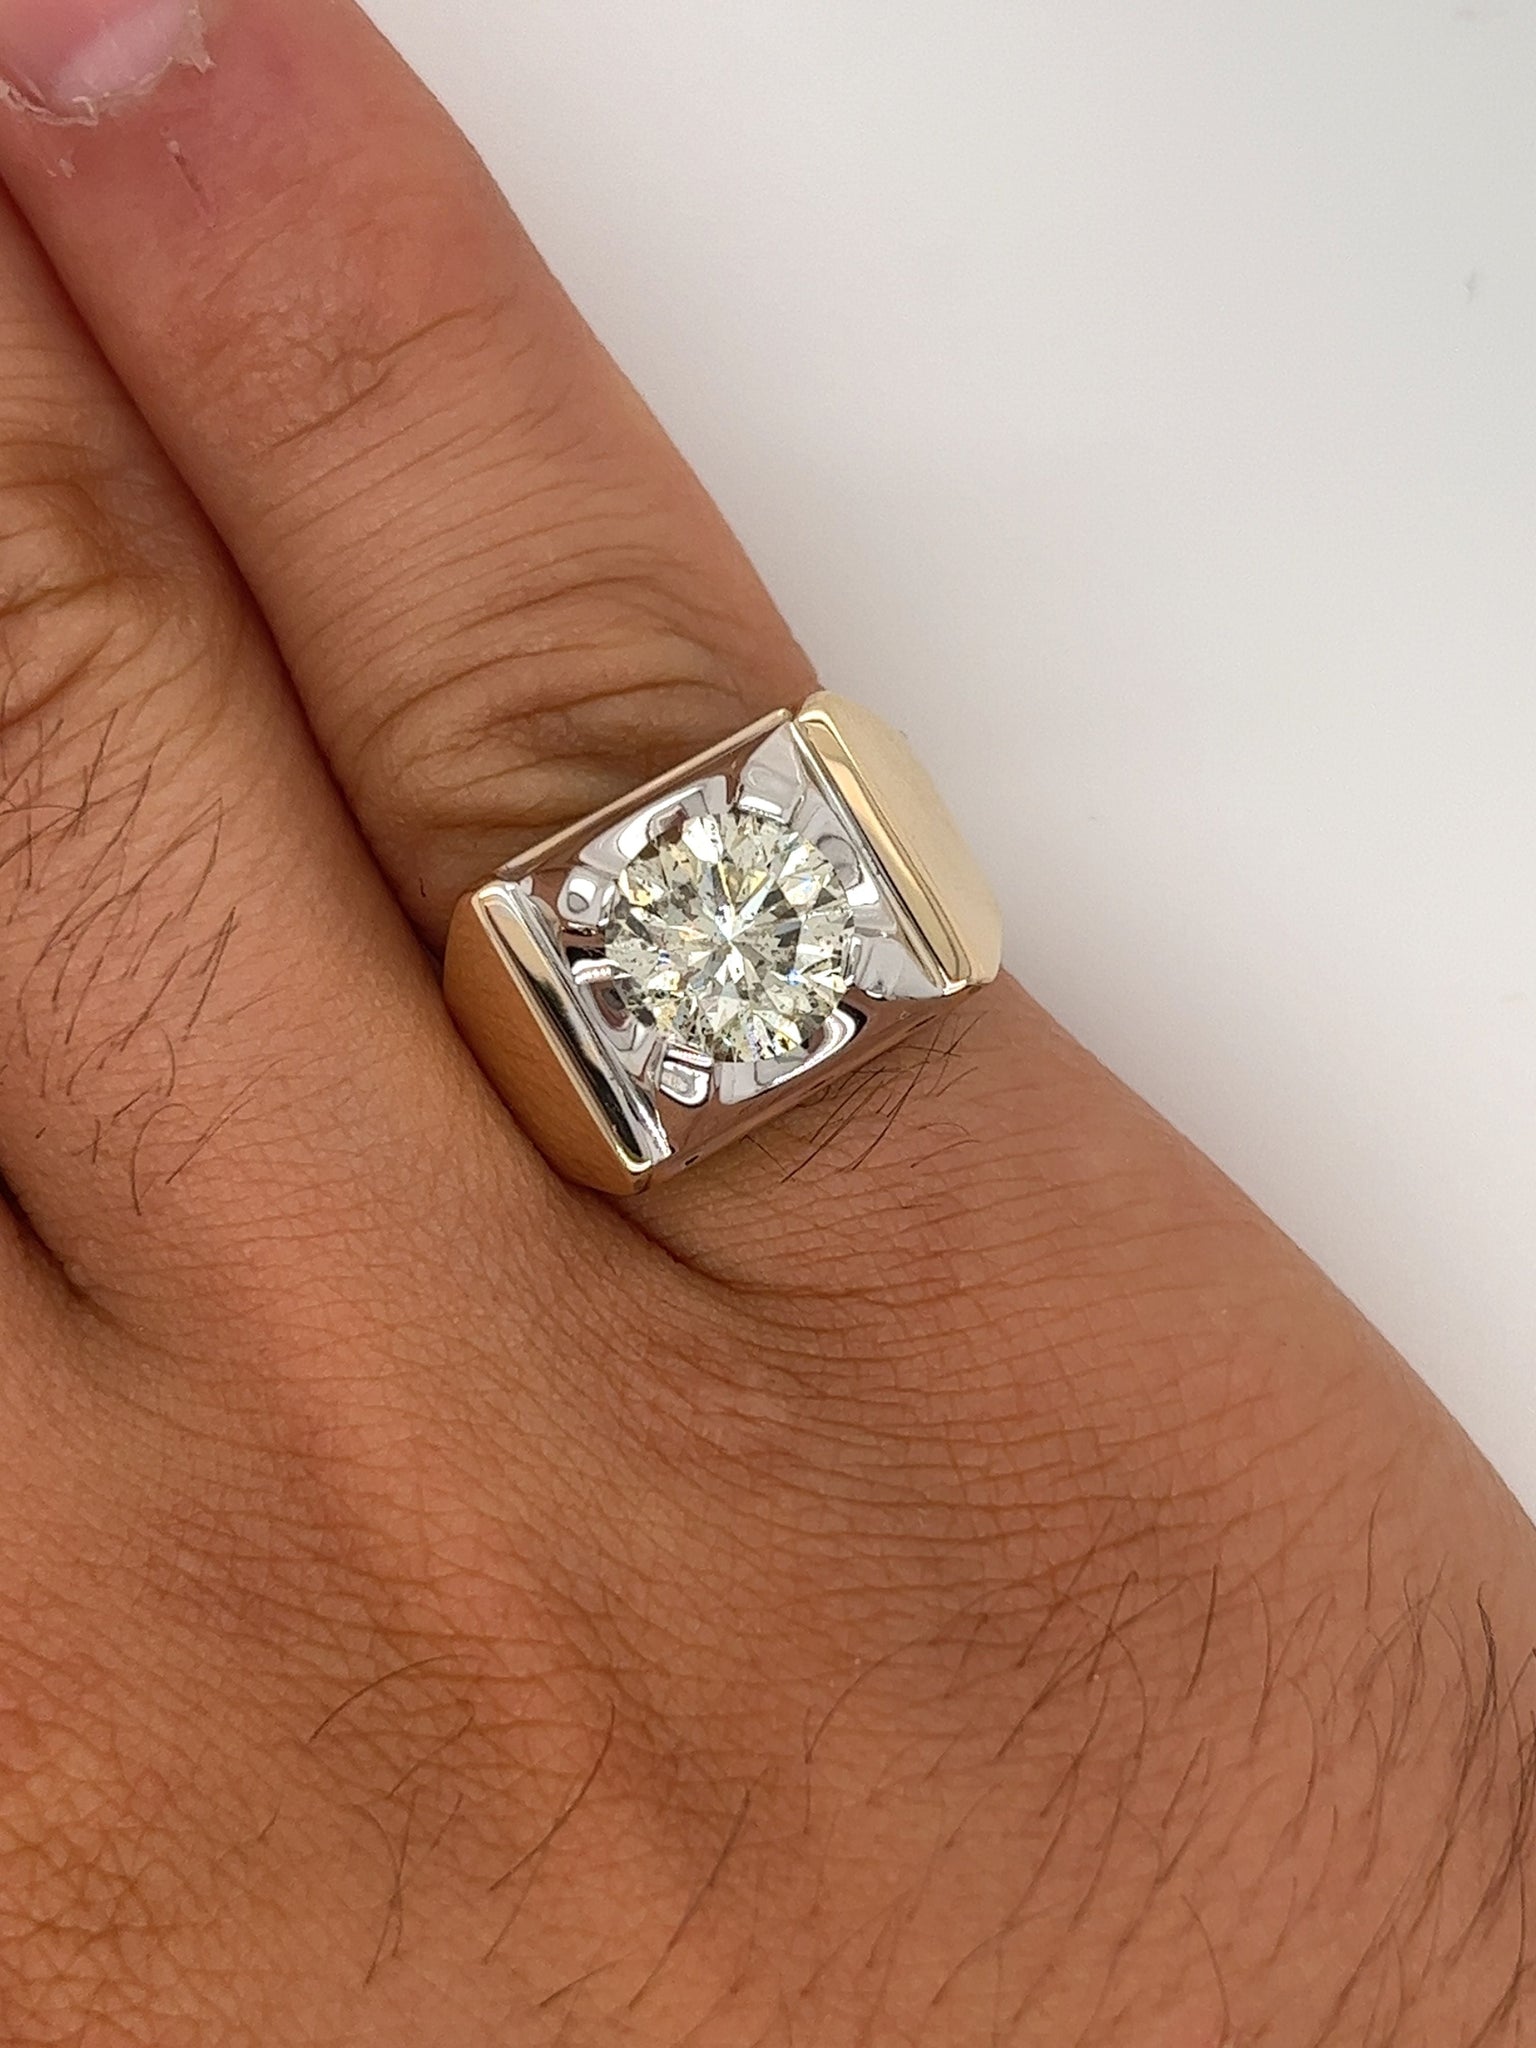 3 Carat Oval Lab Grown Diamond Engagement Ultra Thin Ring